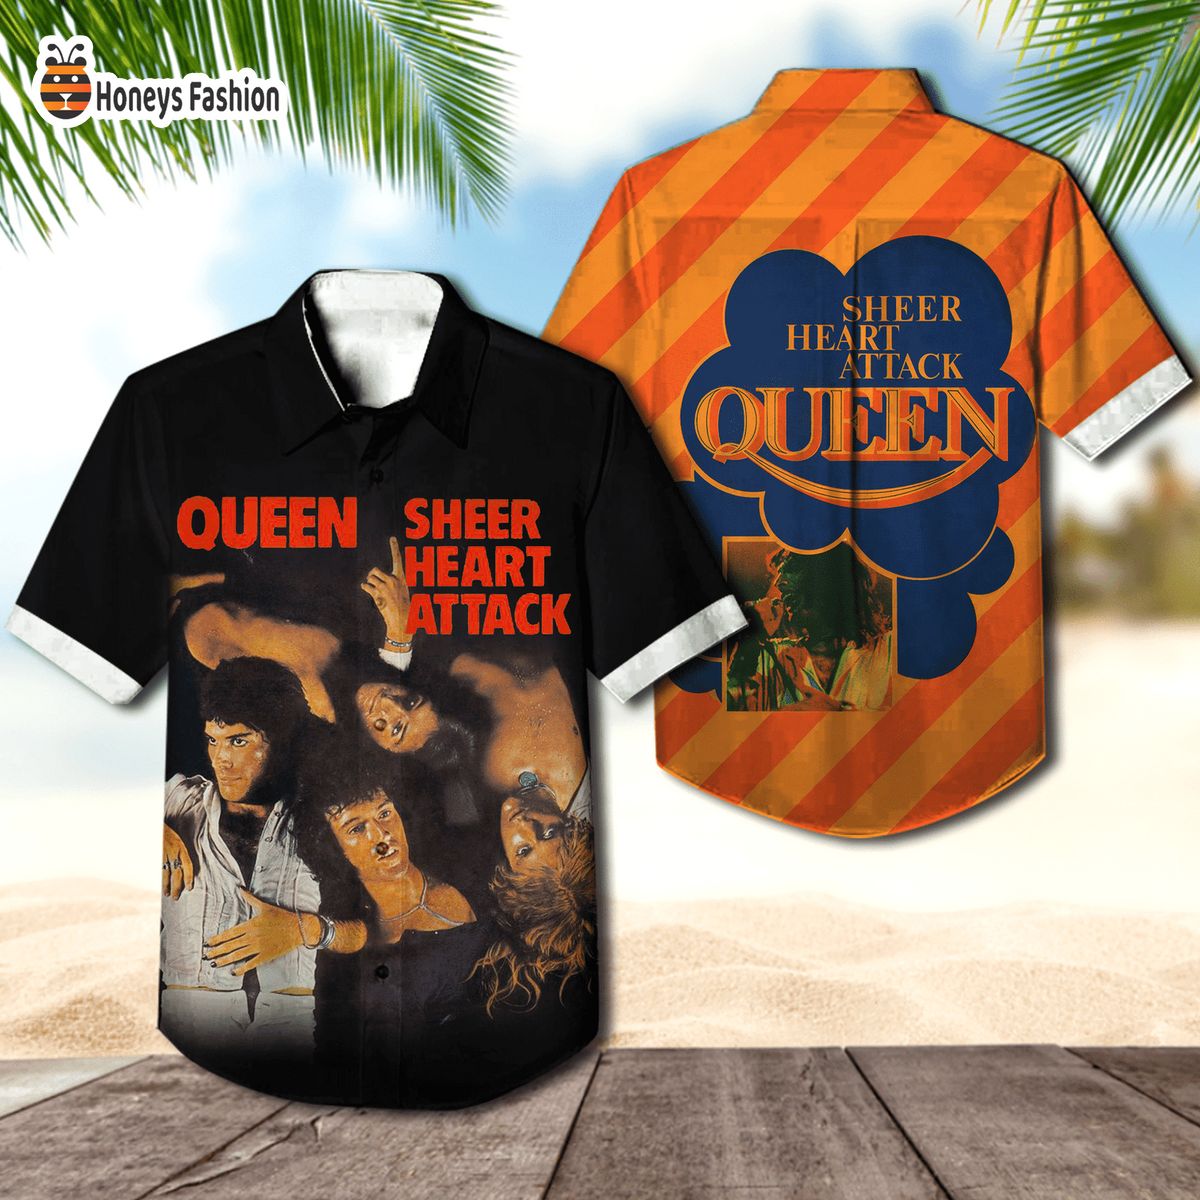 Queen band sheer heart attack 1974 album cover hawaiian shirt